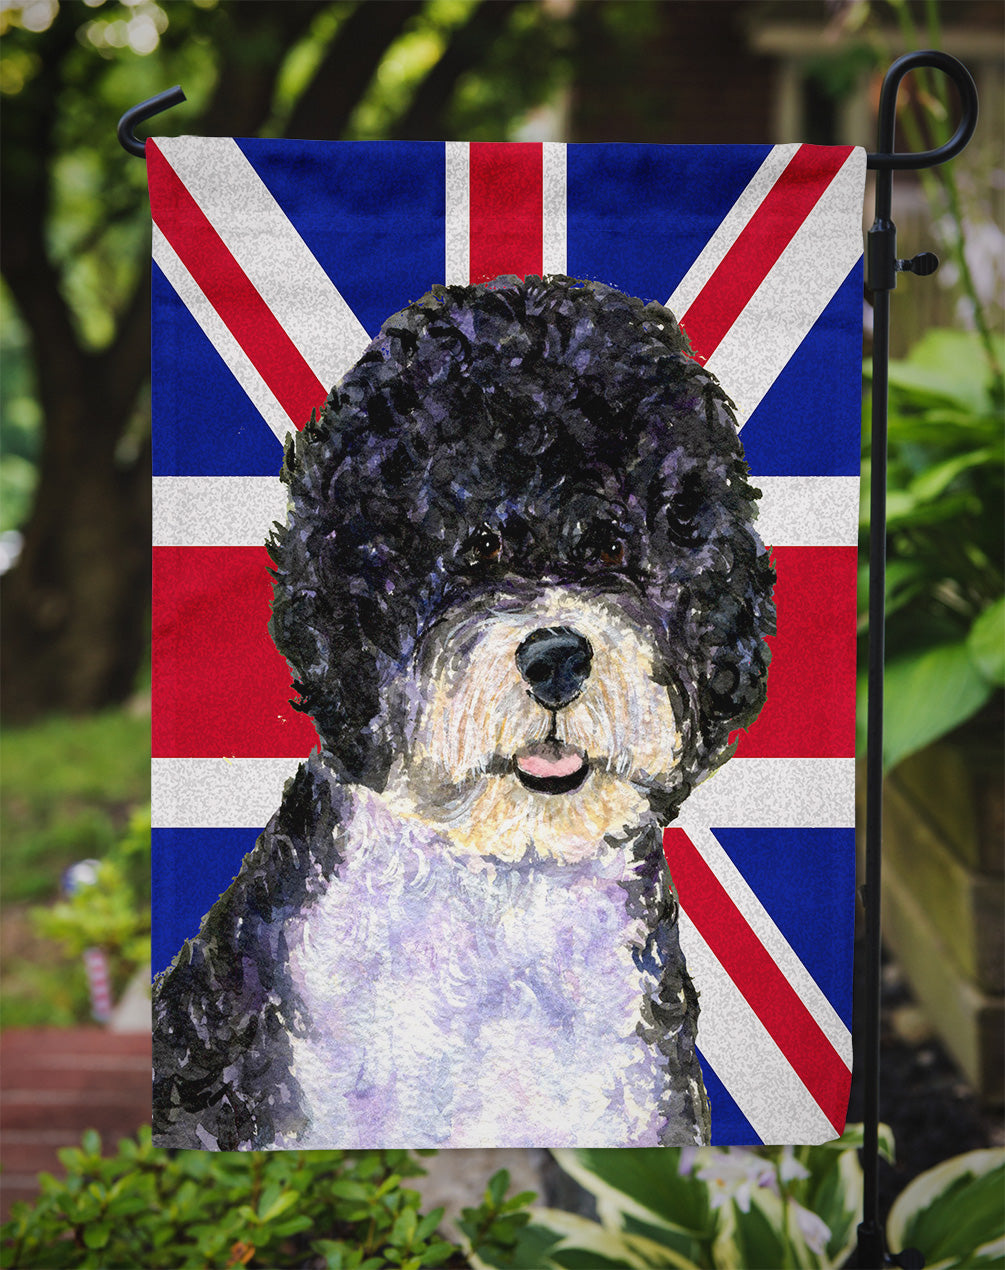 Portuguese Water Dog with English Union Jack British Flag Flag Garden Size